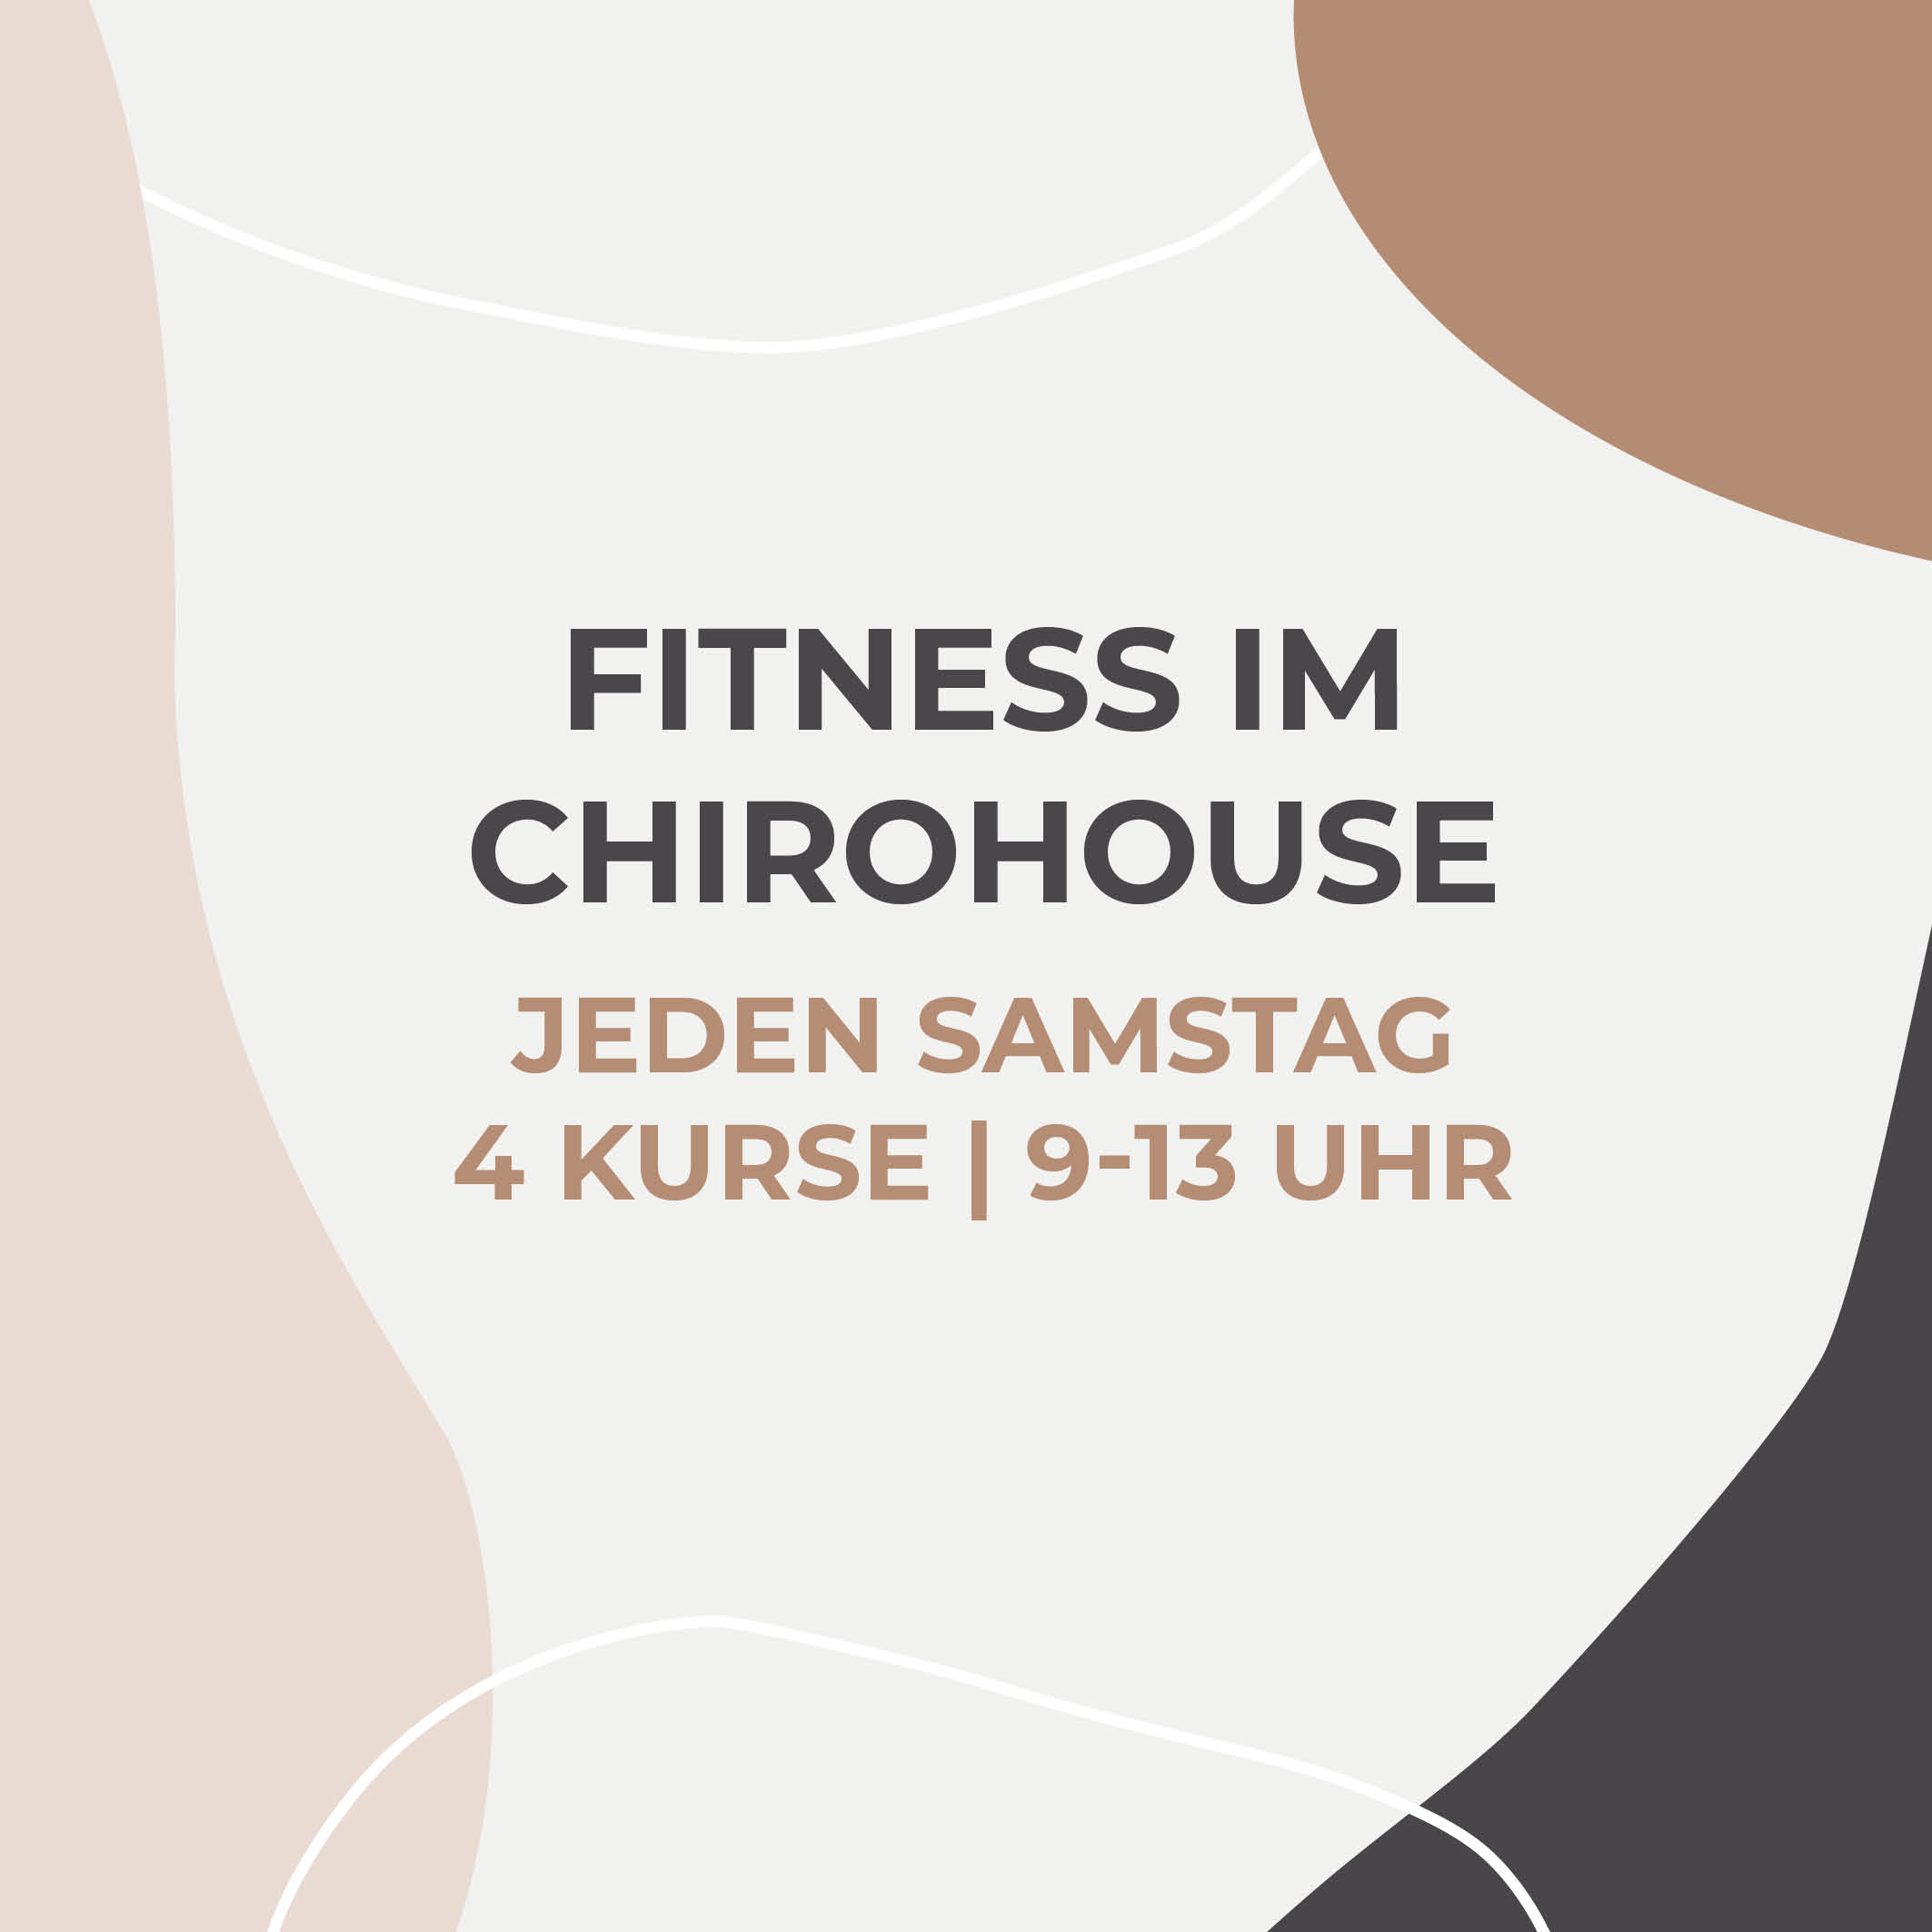 Chirohouse Chiropraktik Berlin www.chirohouse.de - Chiropraxis, Chiropraktoren, Chirotherapeuten, innovative Therapie, Prävention, Training - Fitness im ChiroHouse jeden Samstag - jetzt anmelden!